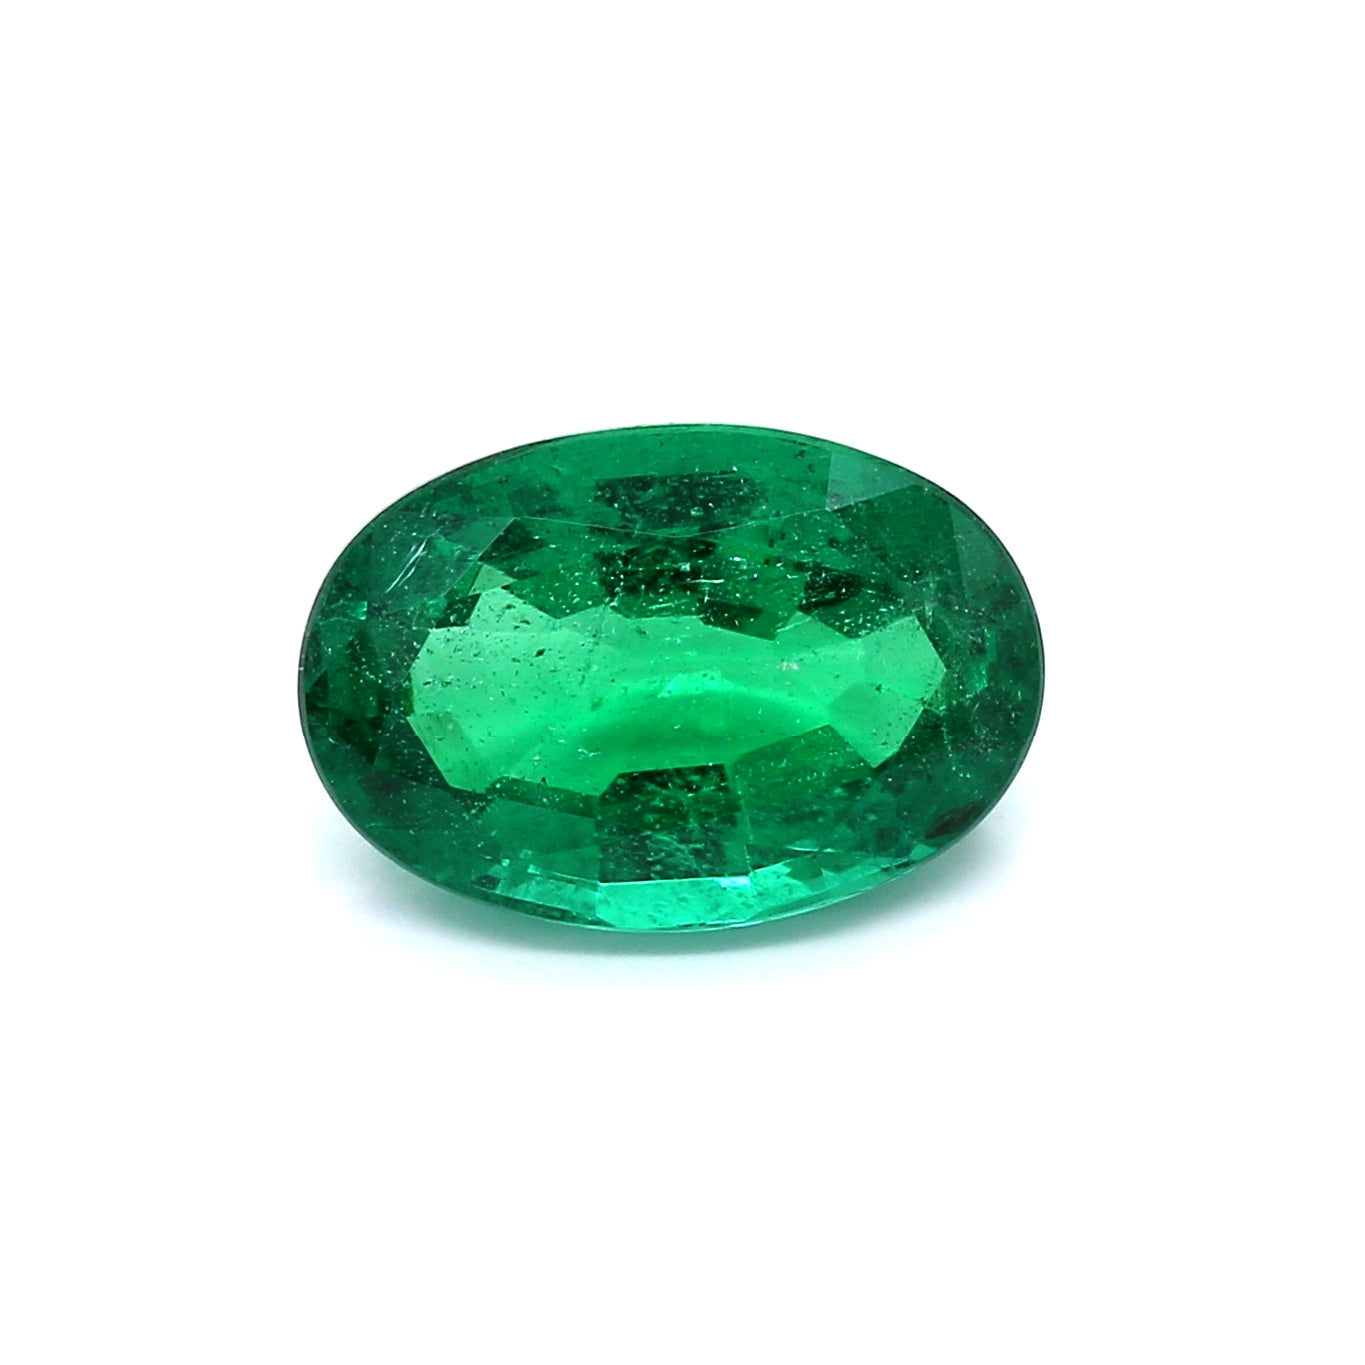 4.24ct Bluish Green, Oval Emerald, Oiled, Brazil - 12.94 x 8.88 x 5.94mm